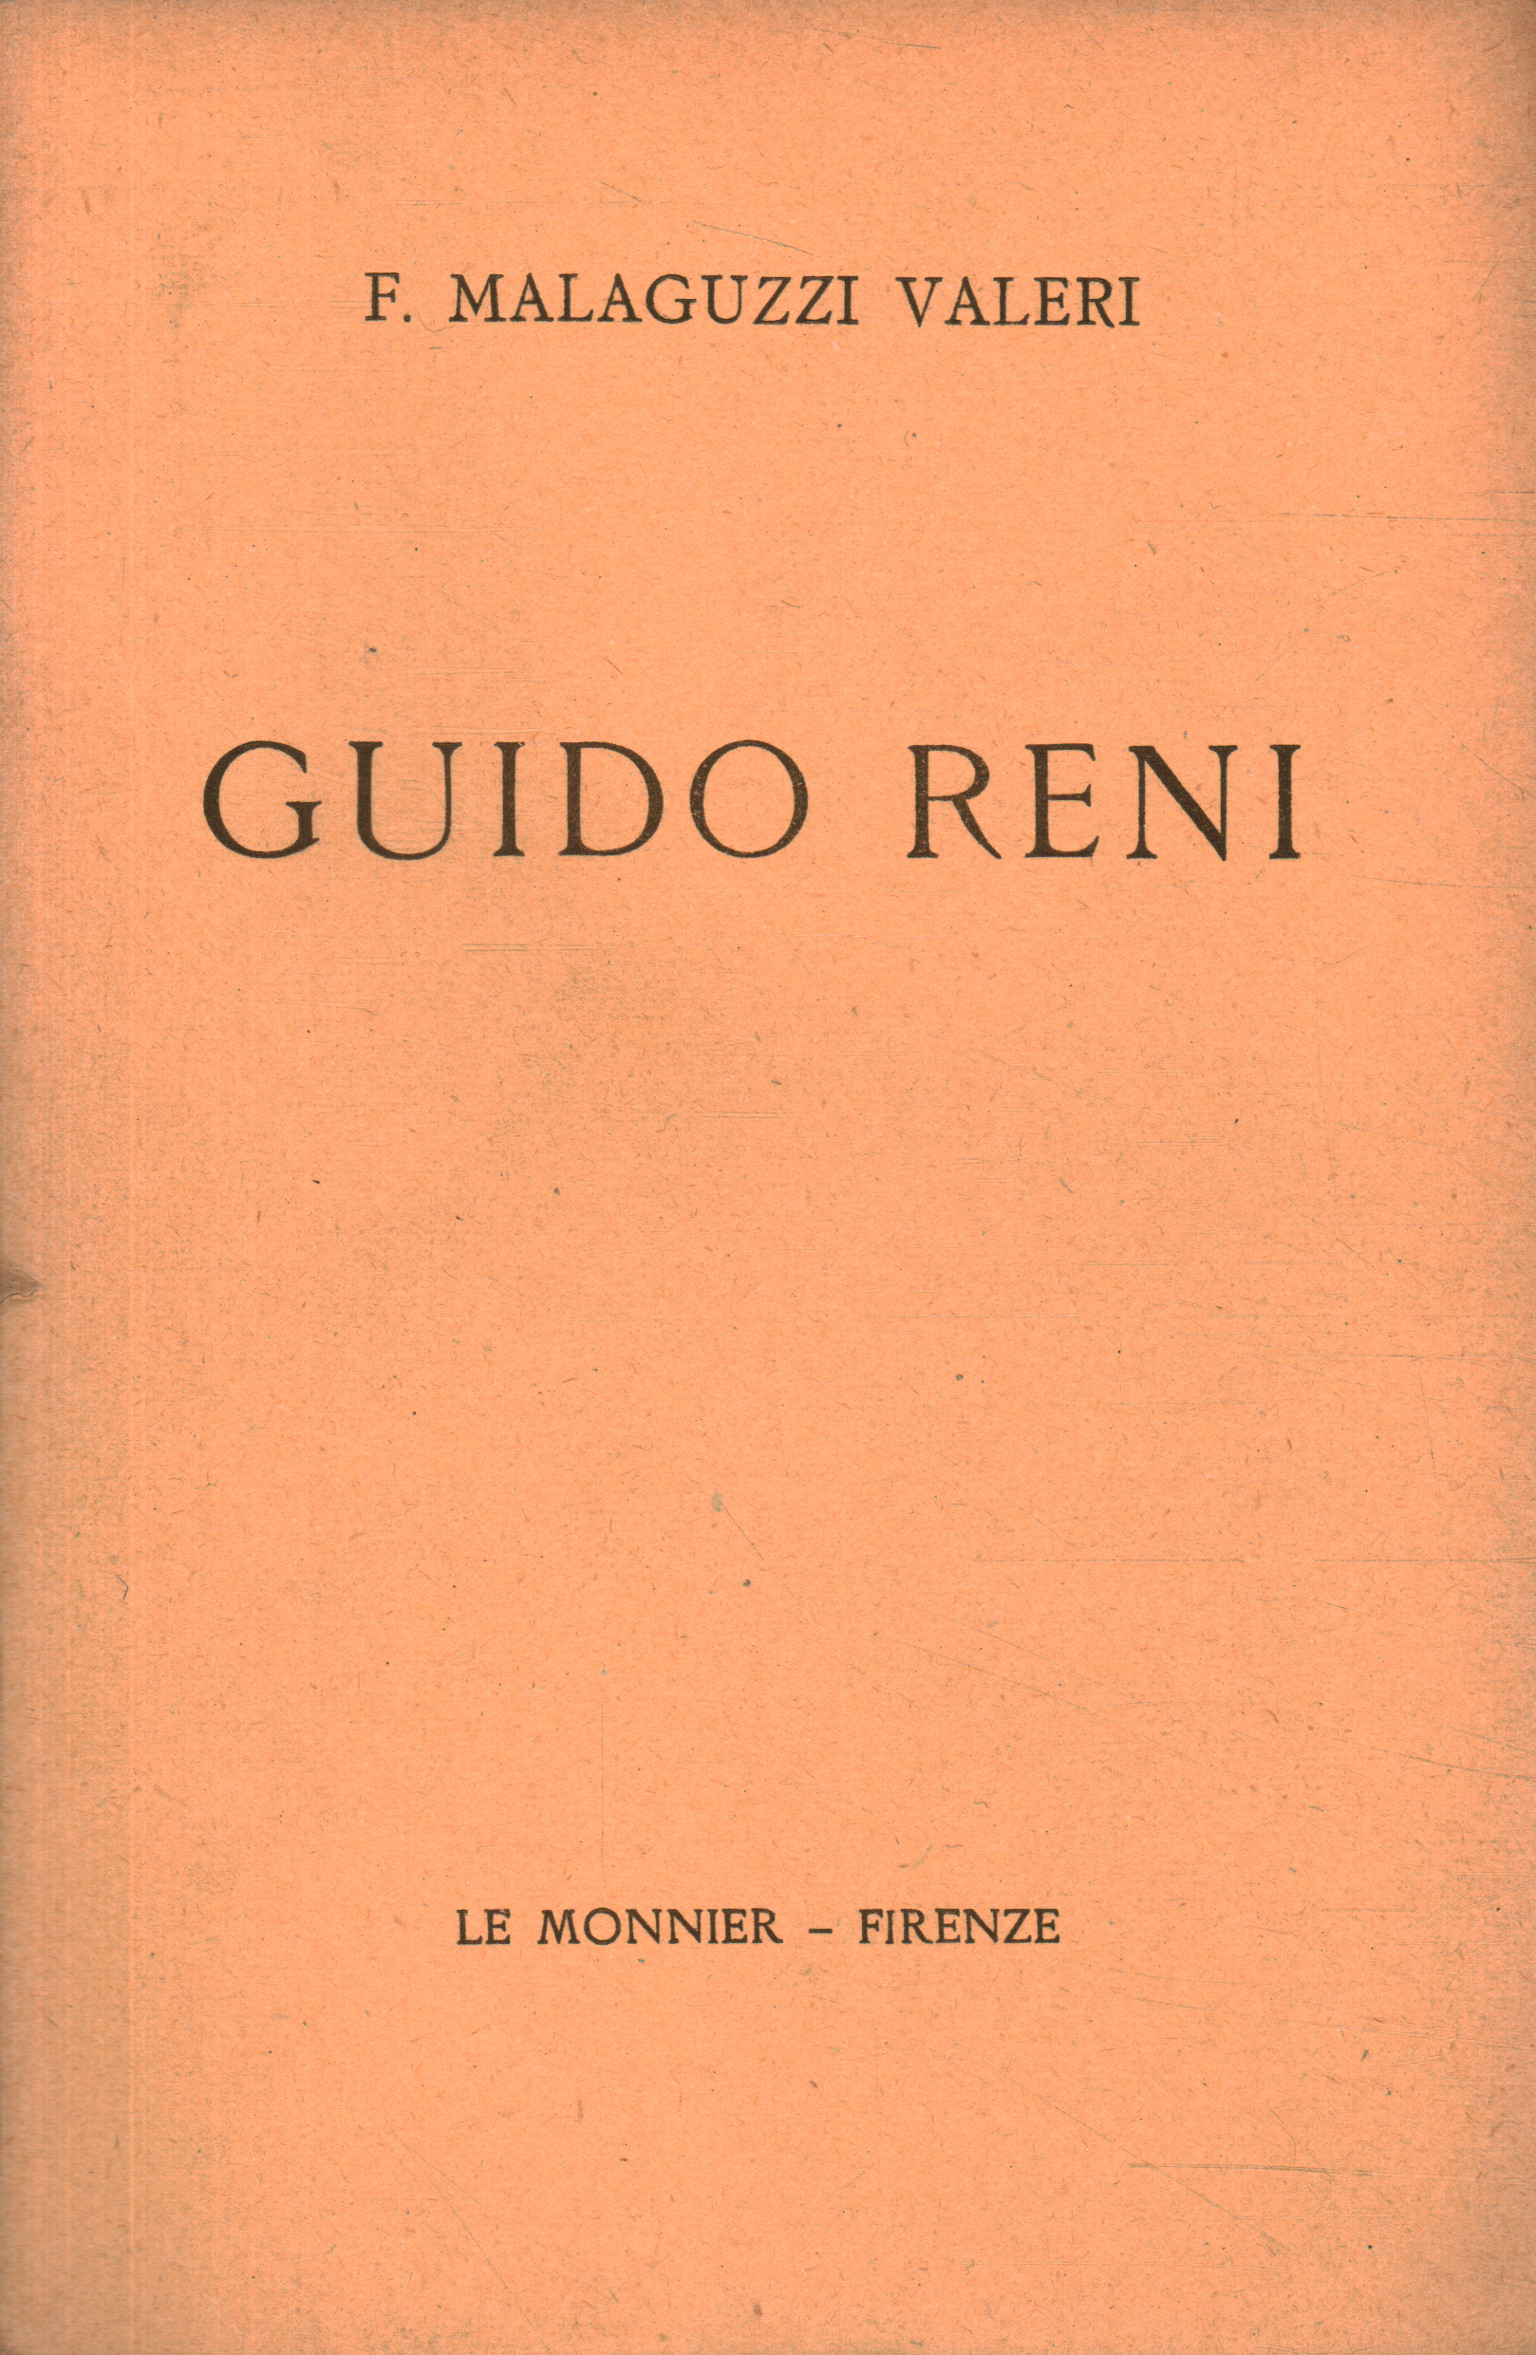 Guido Reni